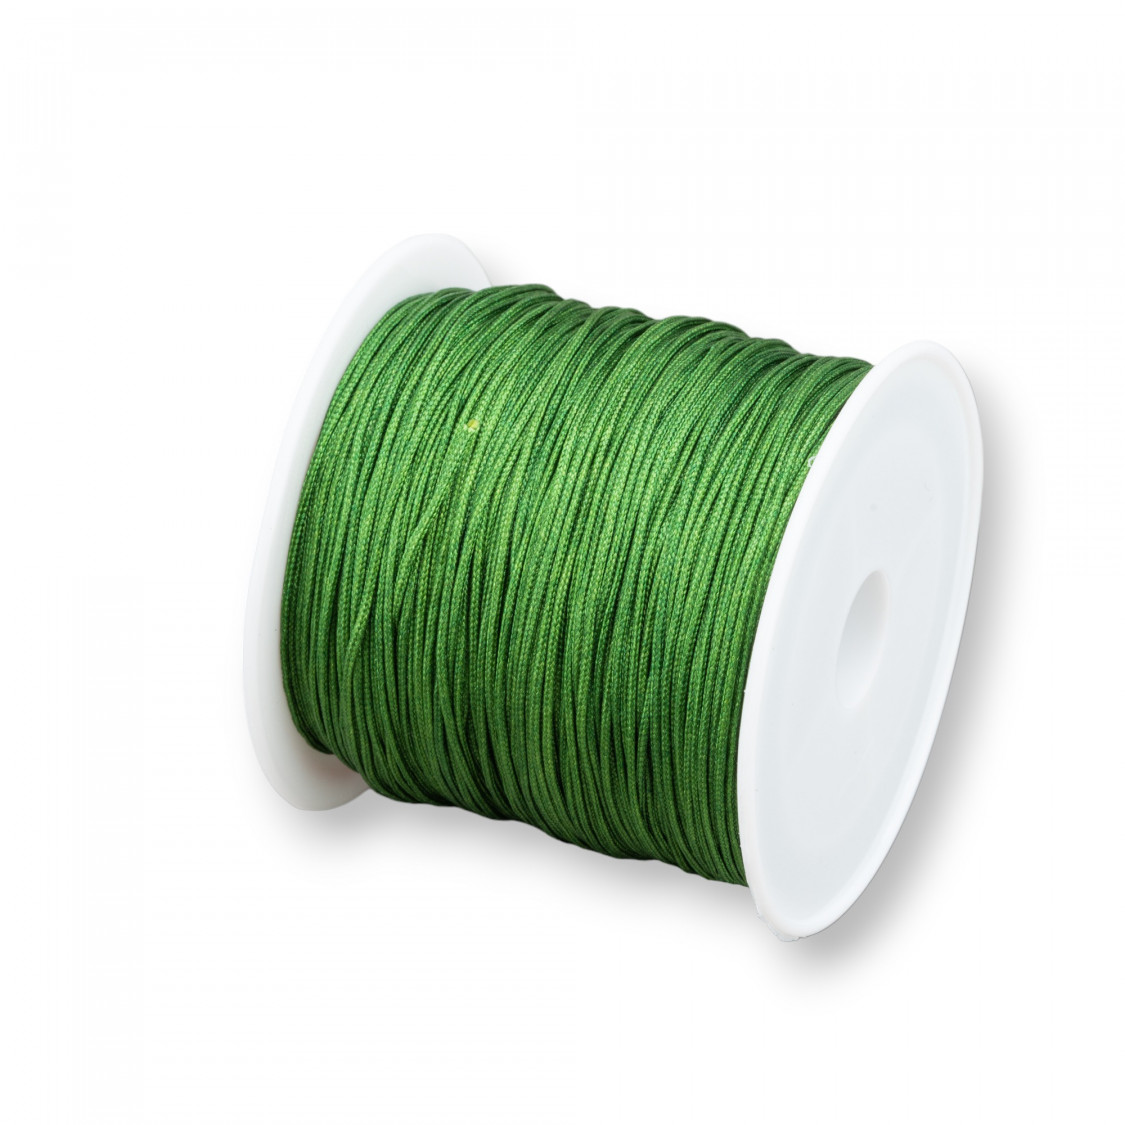 https://www.worldofjewel.com/41484-large_default/nylon-jewelry-thread-chinese-knotting-cord-1mm-25-meters-green.jpg